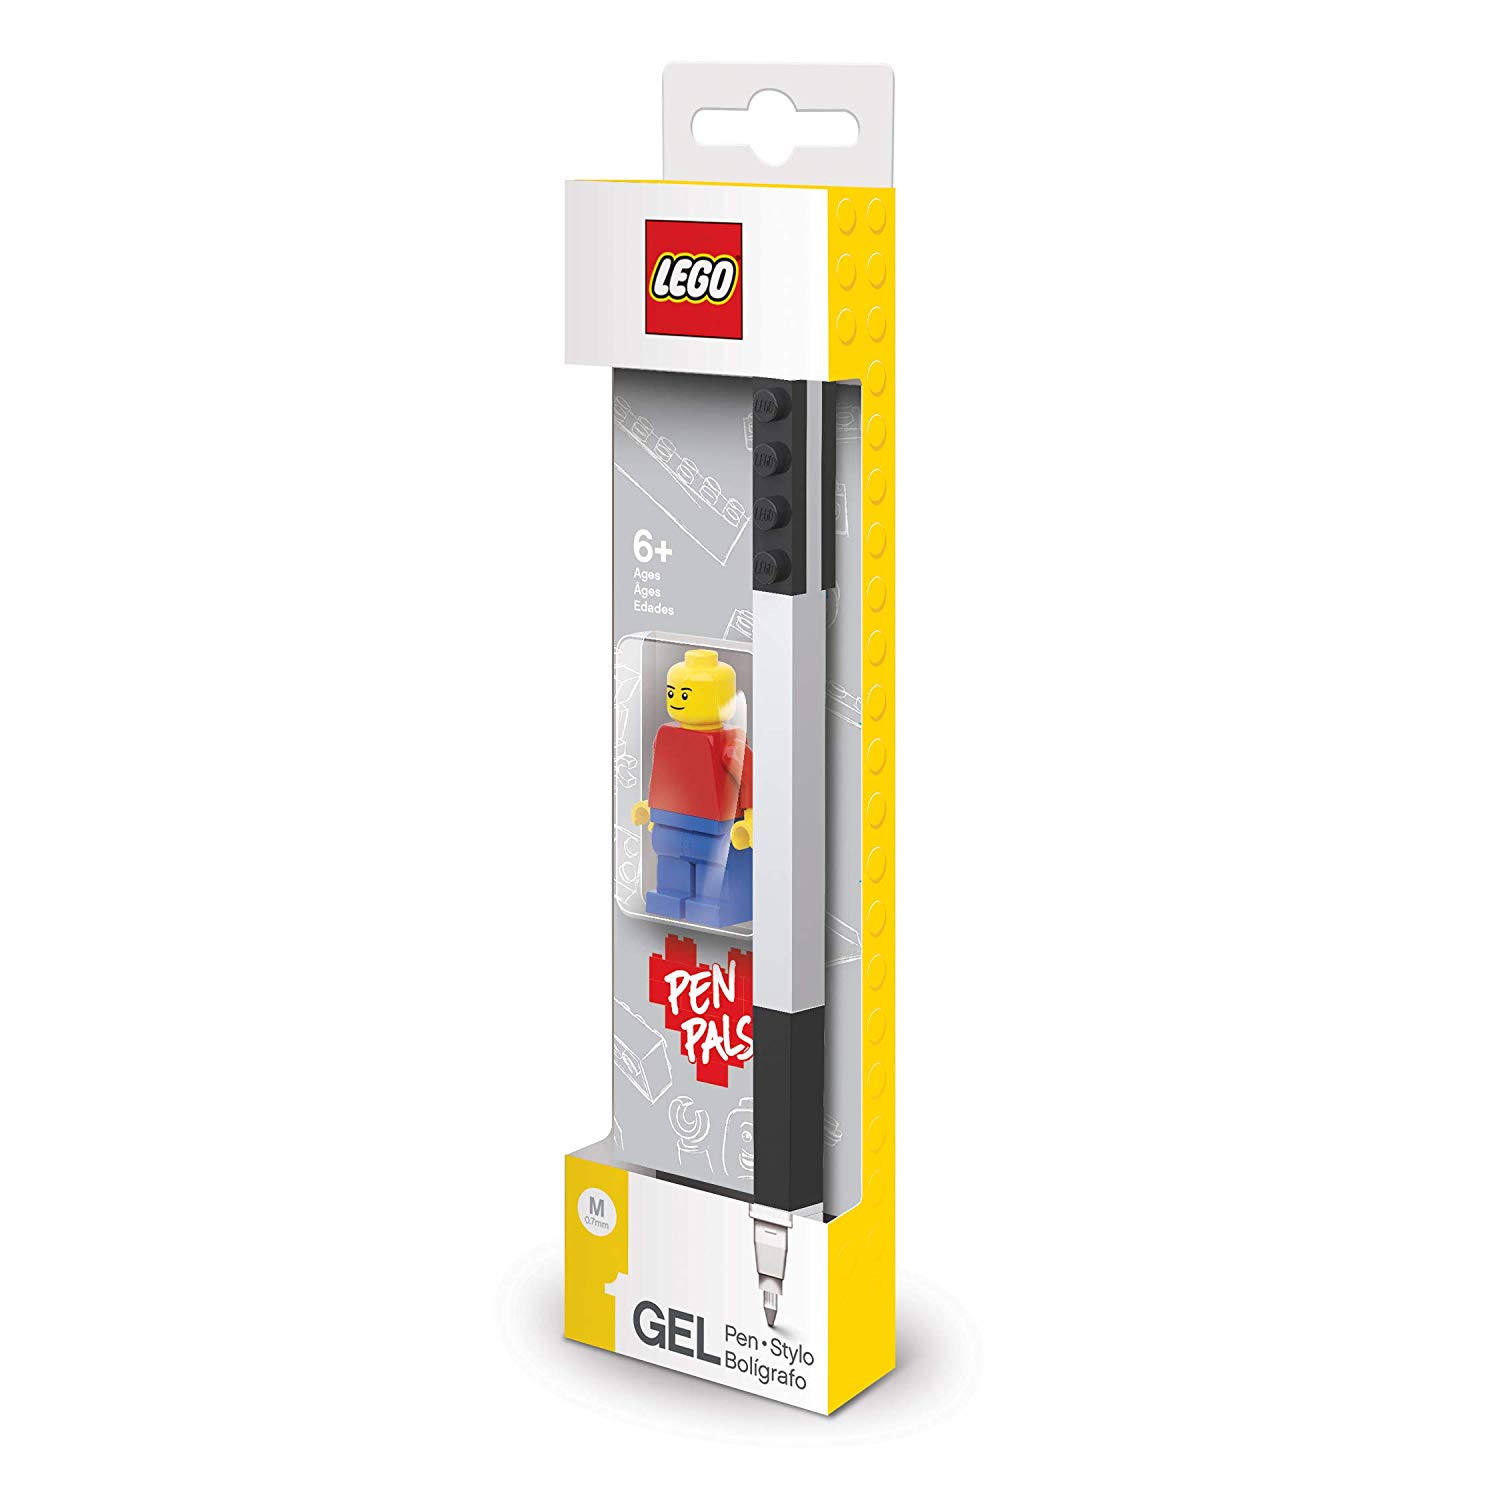 Lego Gel Pen - Black + Minifigures